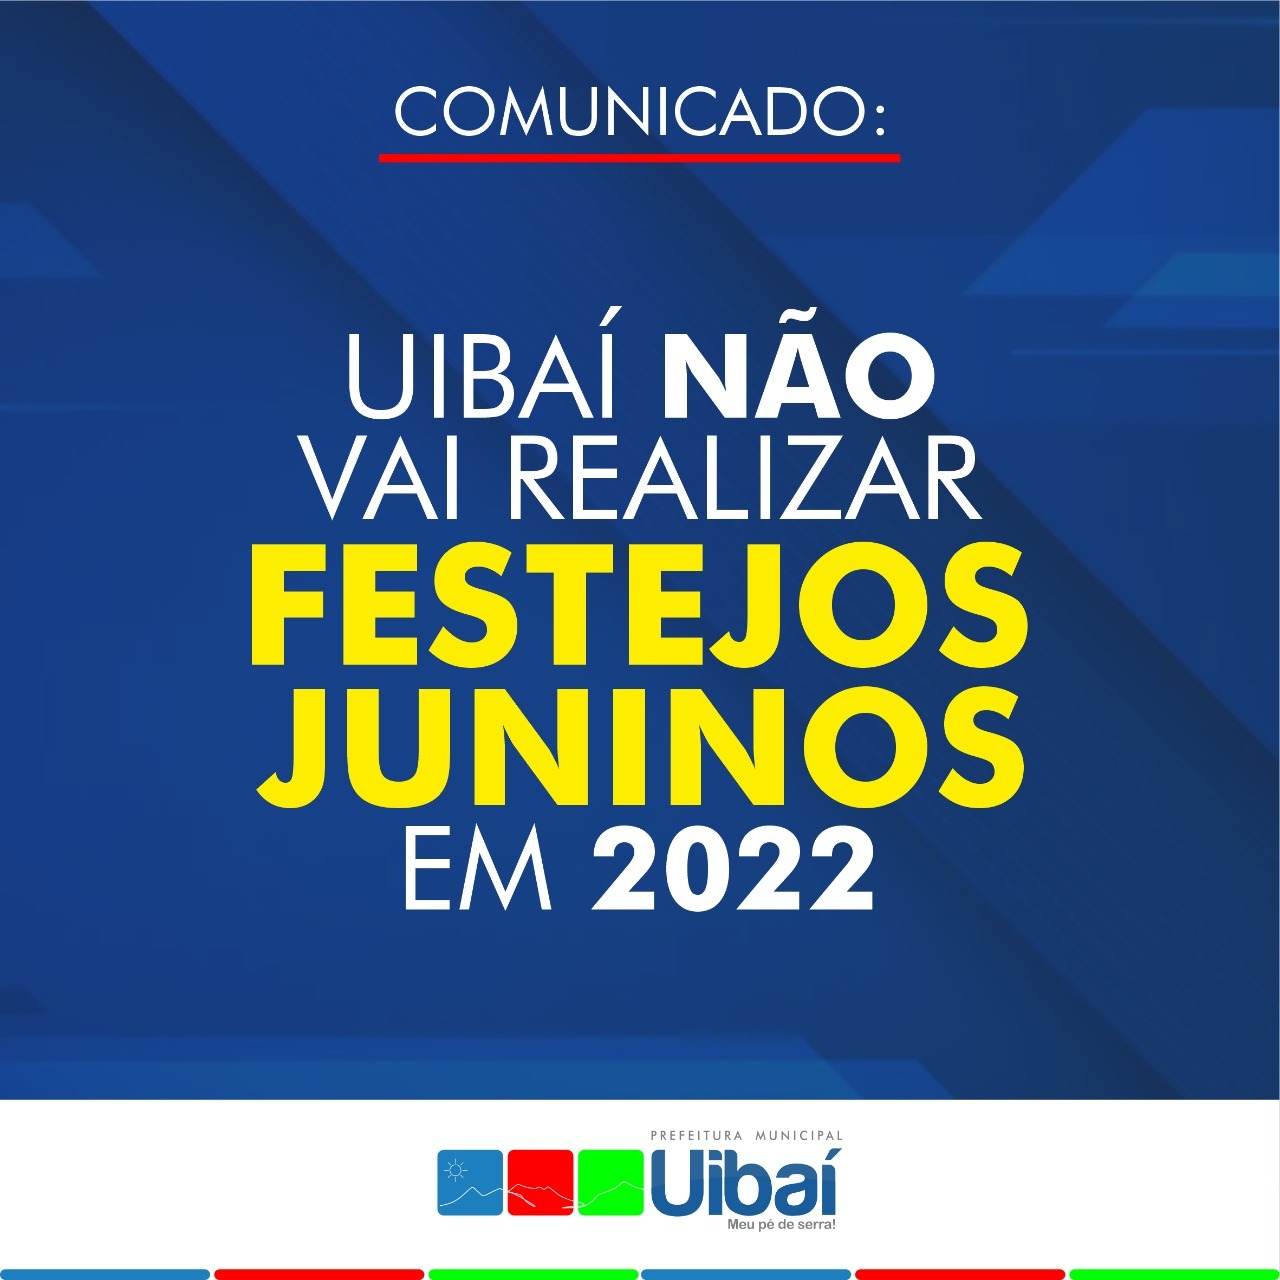 Uiba-no-vai-realizar-festejos-juninos-em-2022